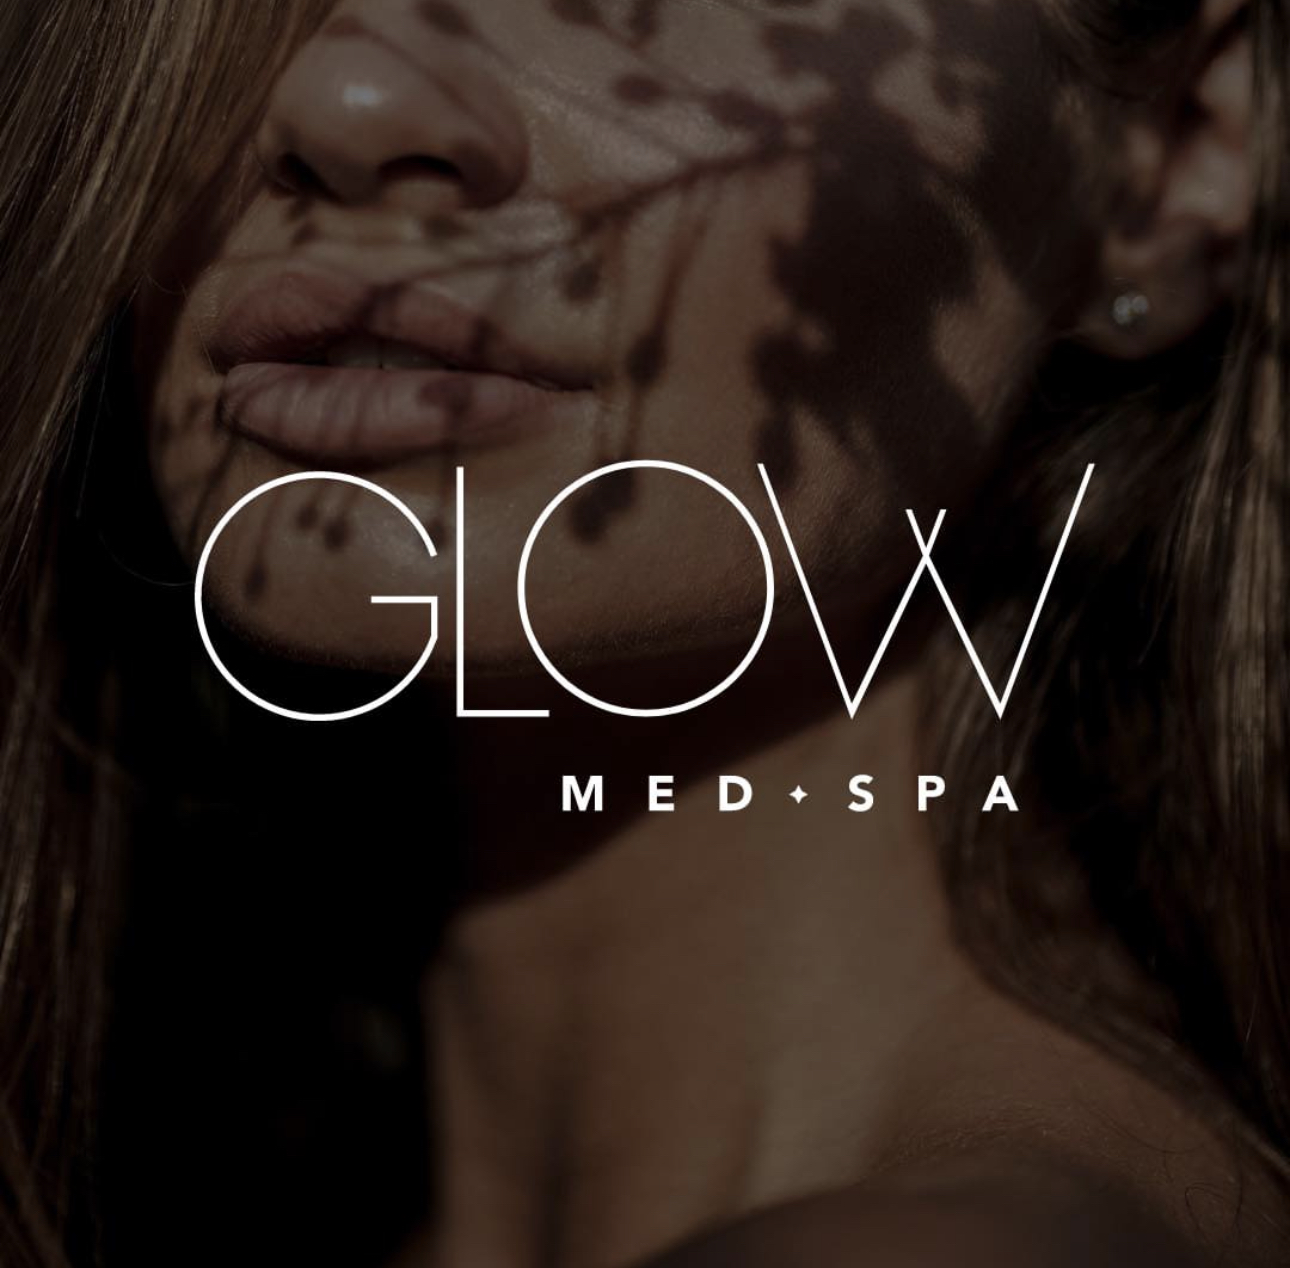 Glow Med Spa